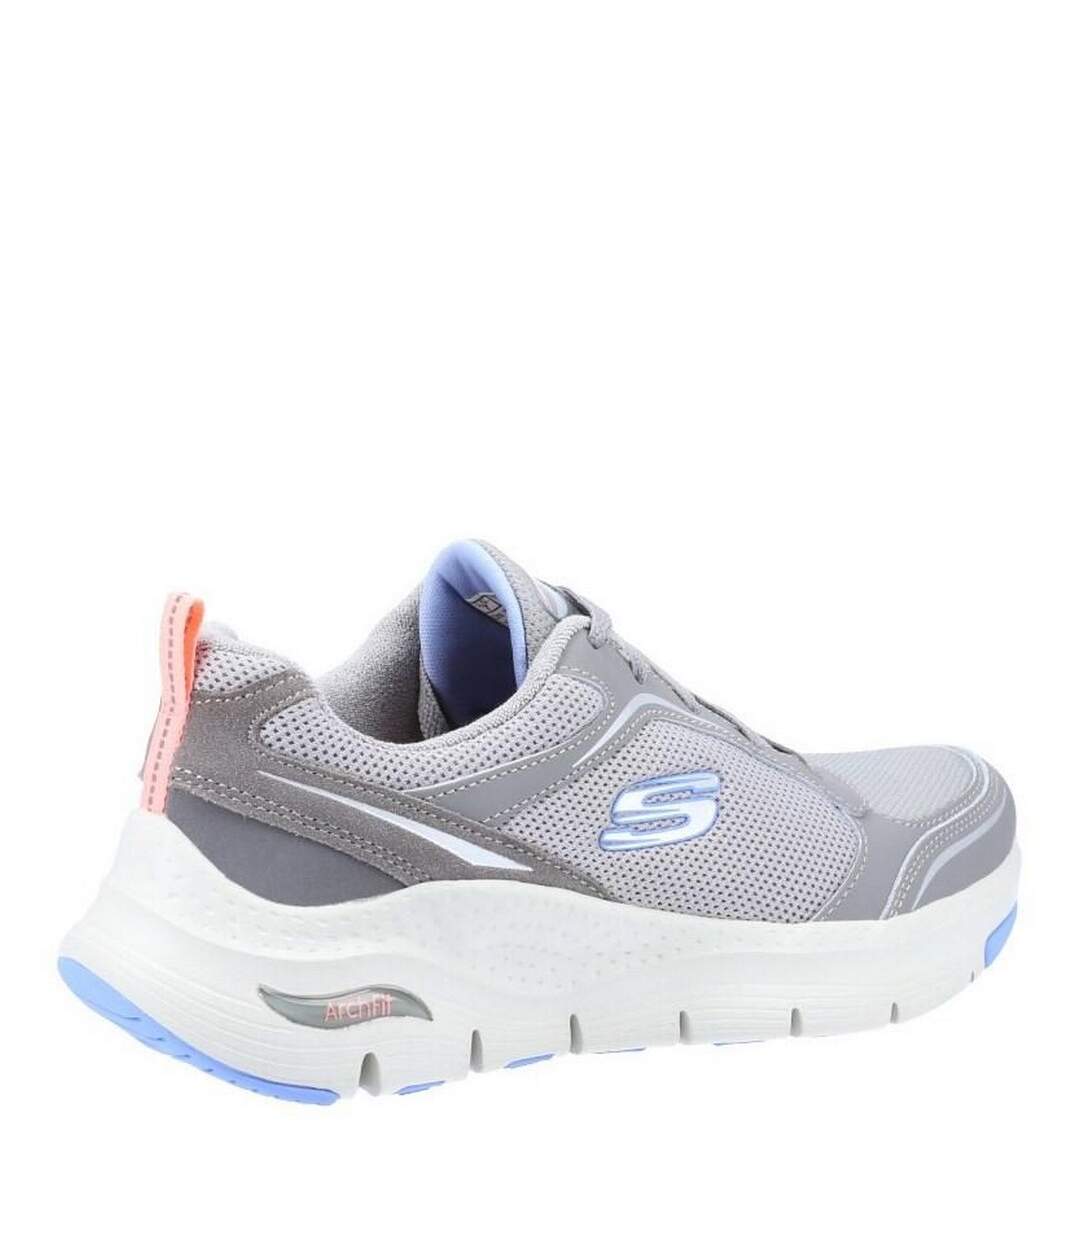 Skechers Womens/Ladies Arch Fit Gentle Stride Leather Sneakers (Gray/Blue) - UTFS8524